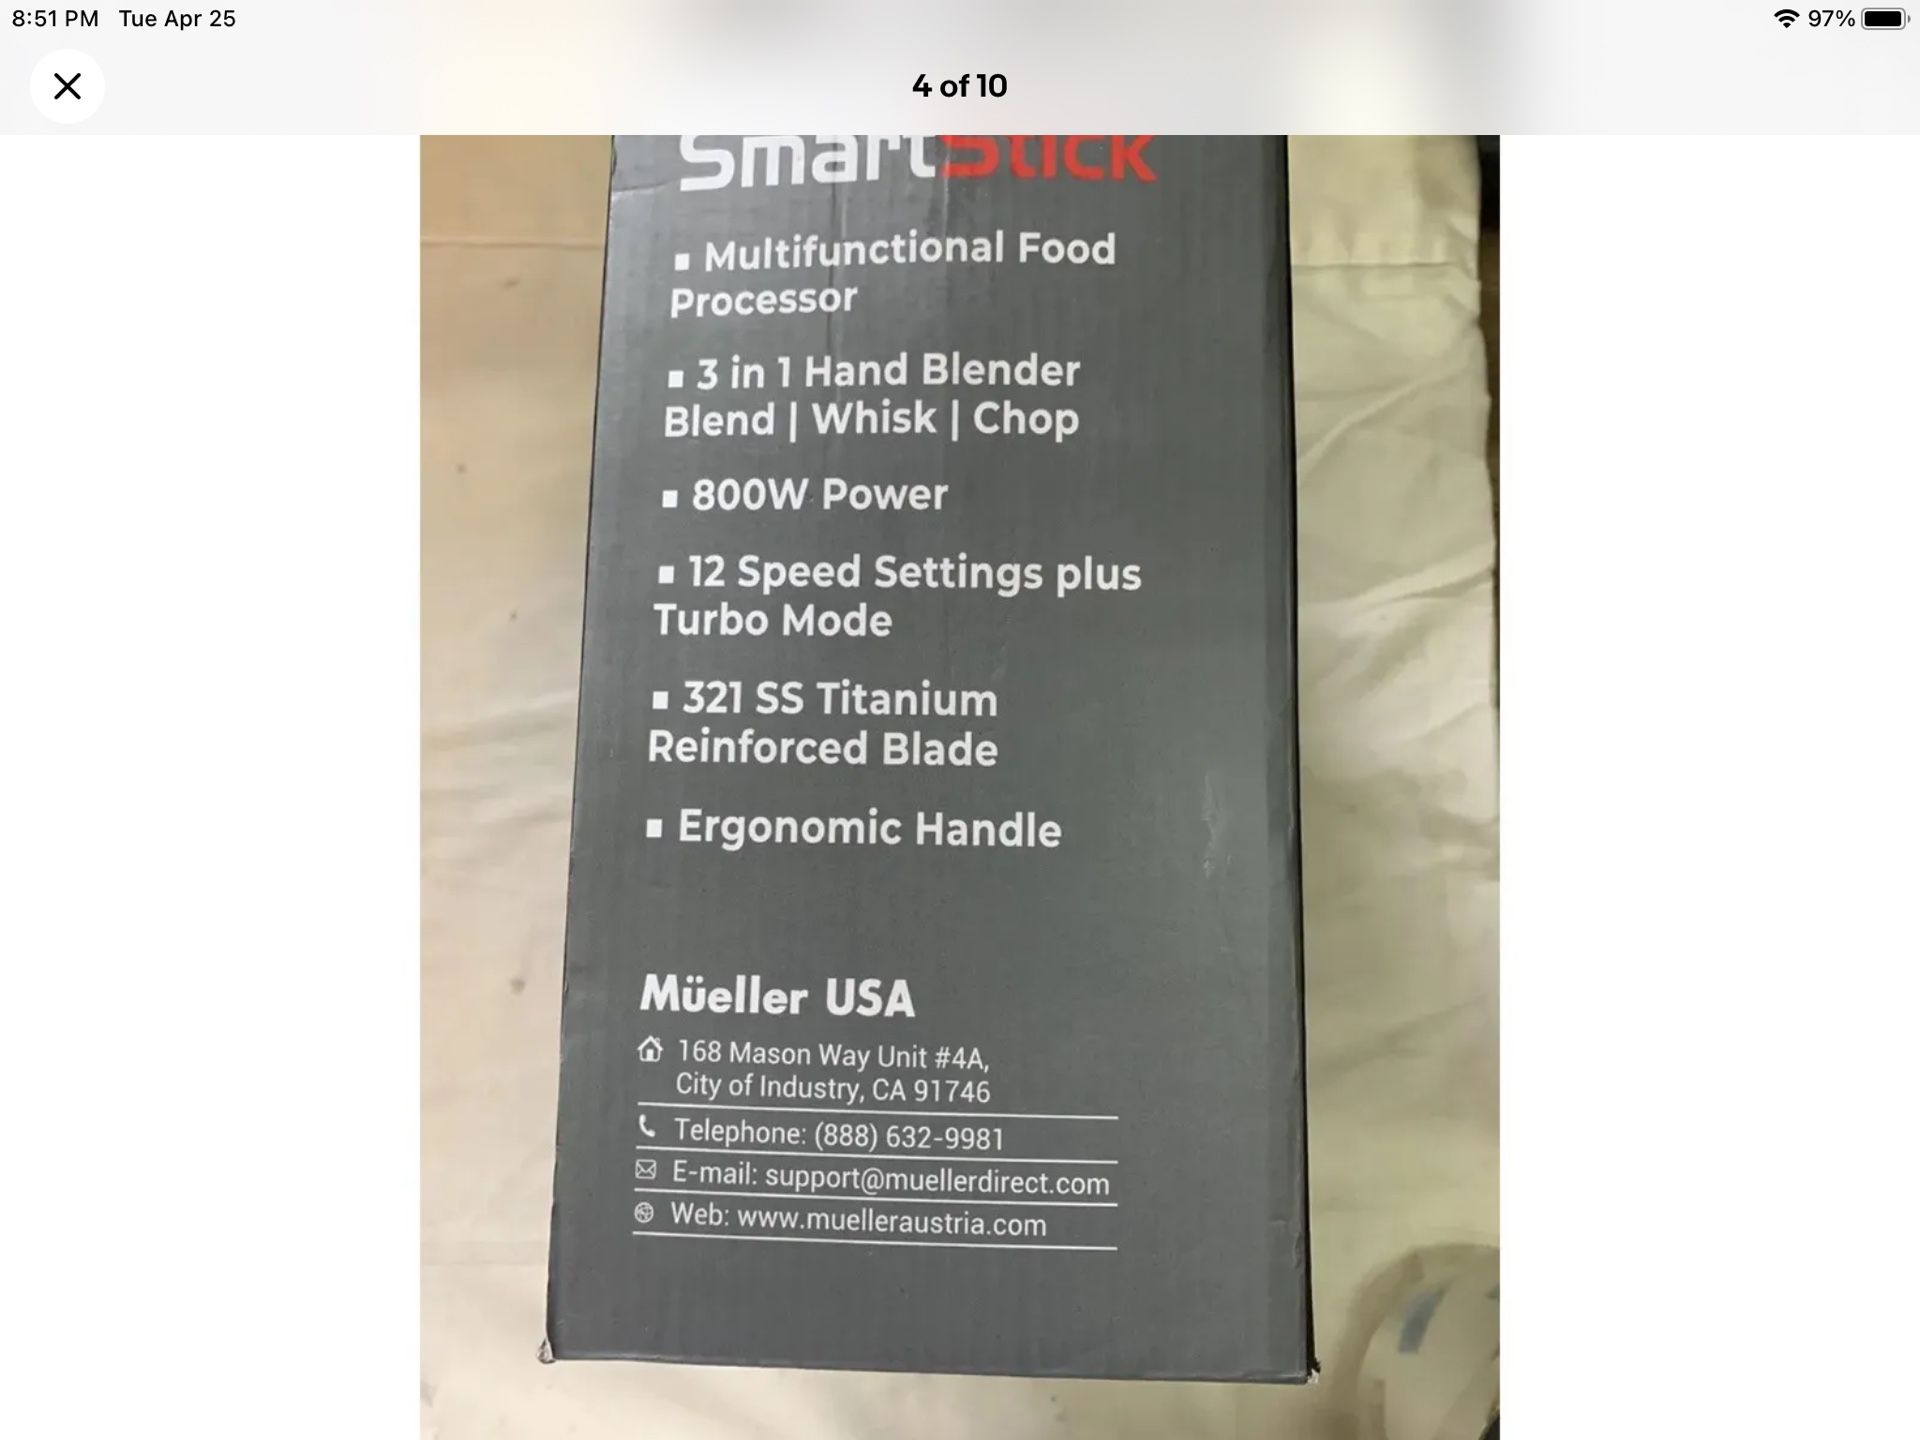 Mueller Austria Smart Stick MU-HB-10, 3 In 1 Hand Blender, Blend